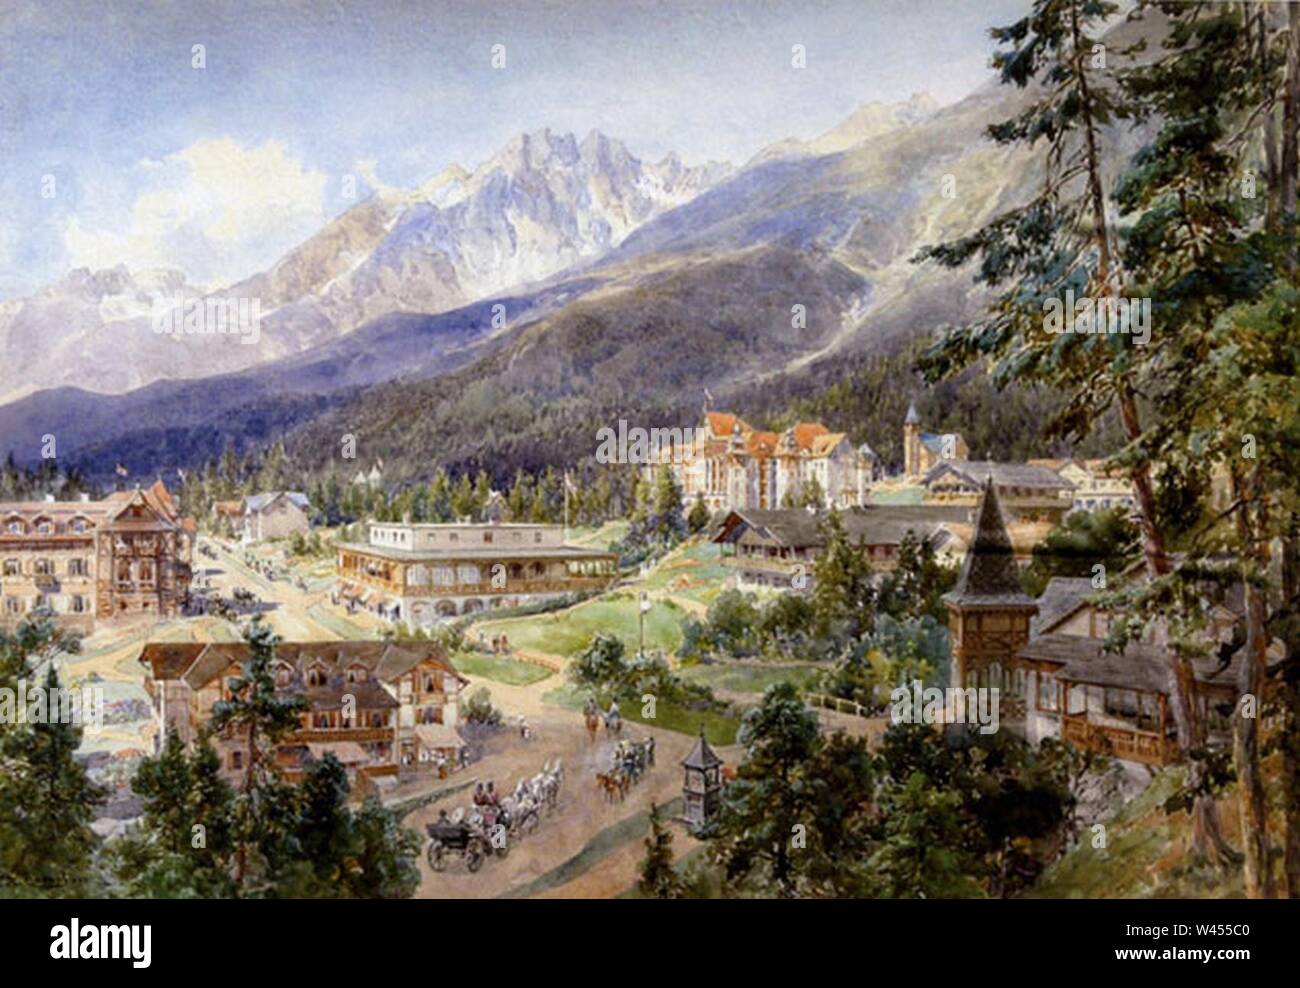 Compton 1890 Altschmecks in der Hohen Tatra. Stockfoto